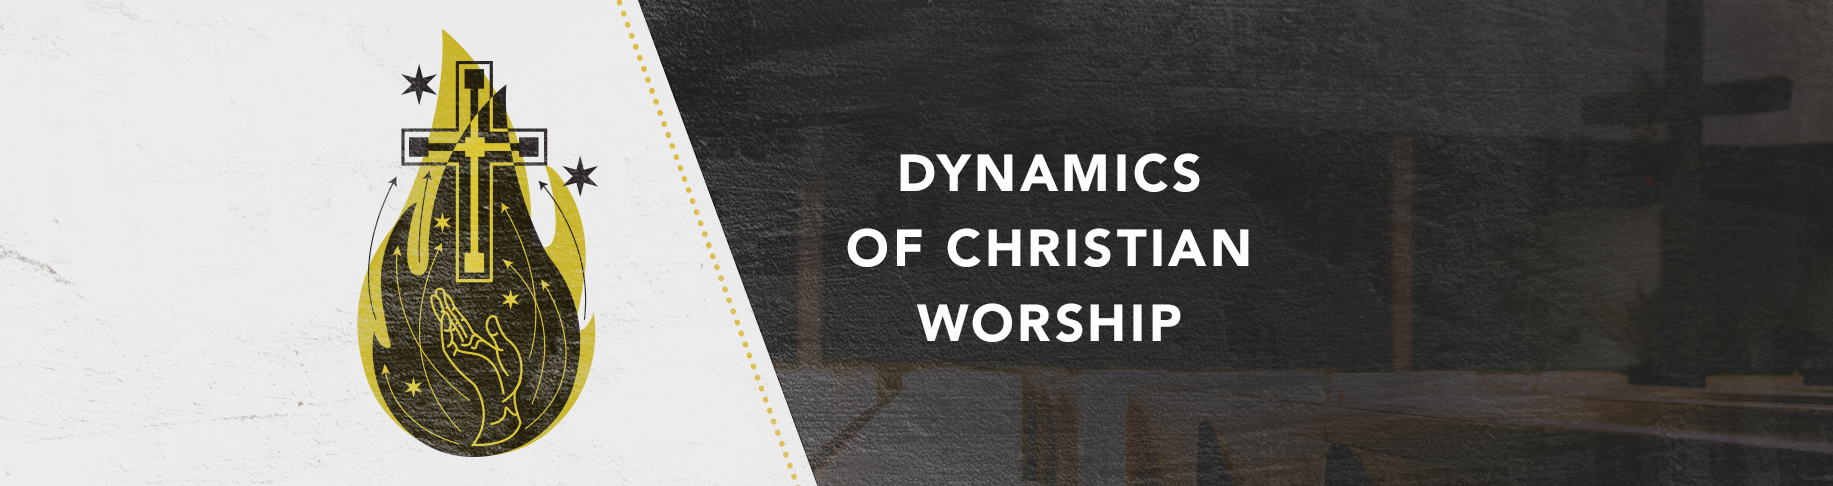 Dynamics of Christian Worship